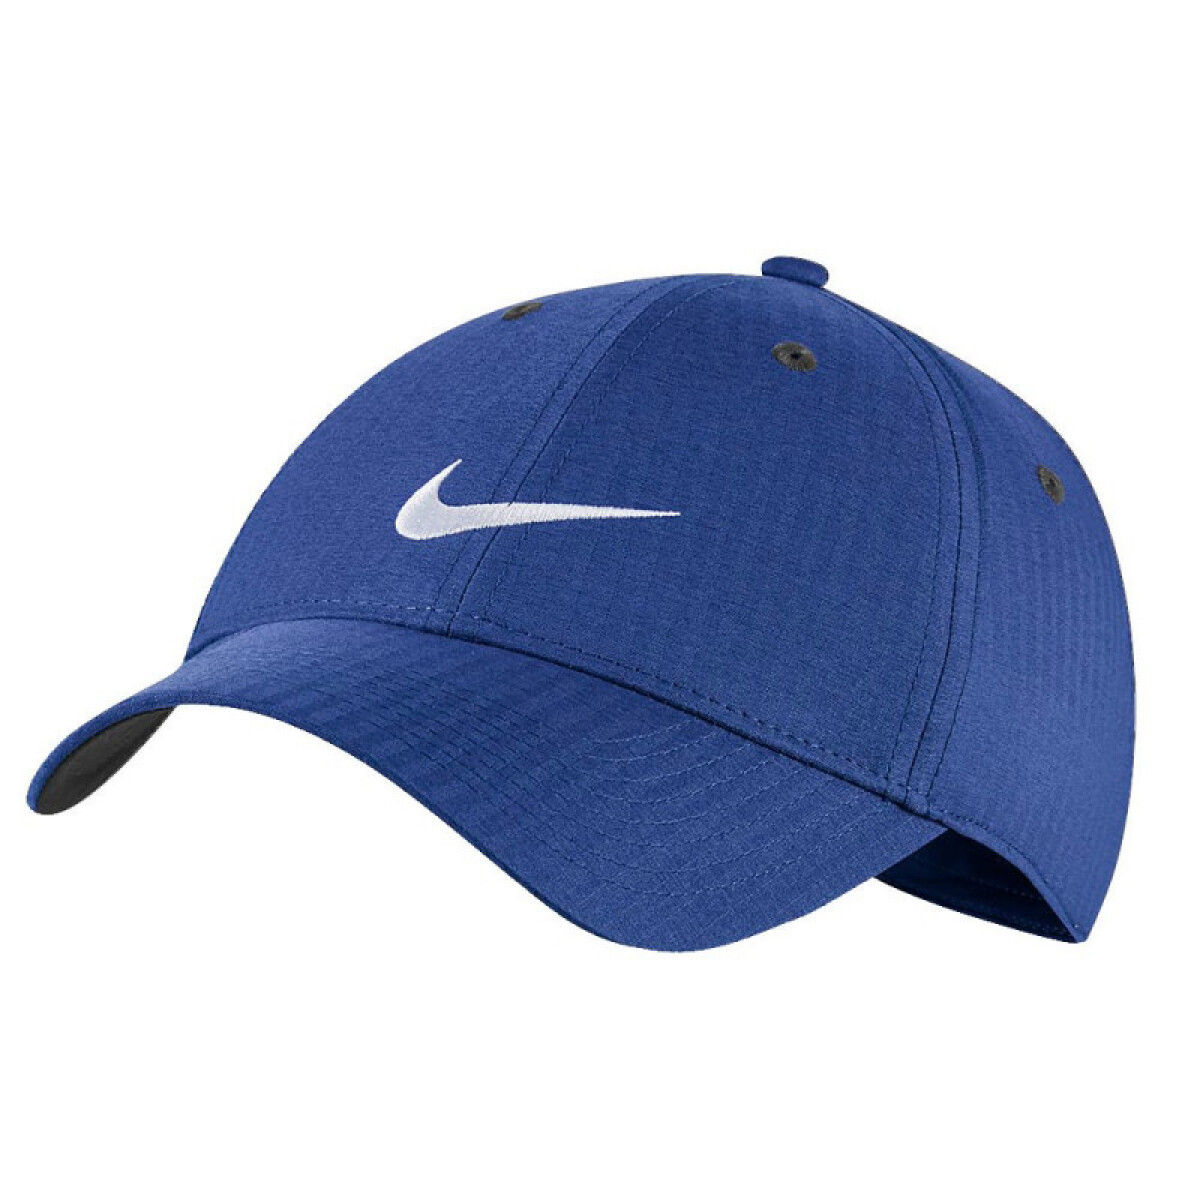 Gorro Nike L91 Tech Cap Azul - Color Único 